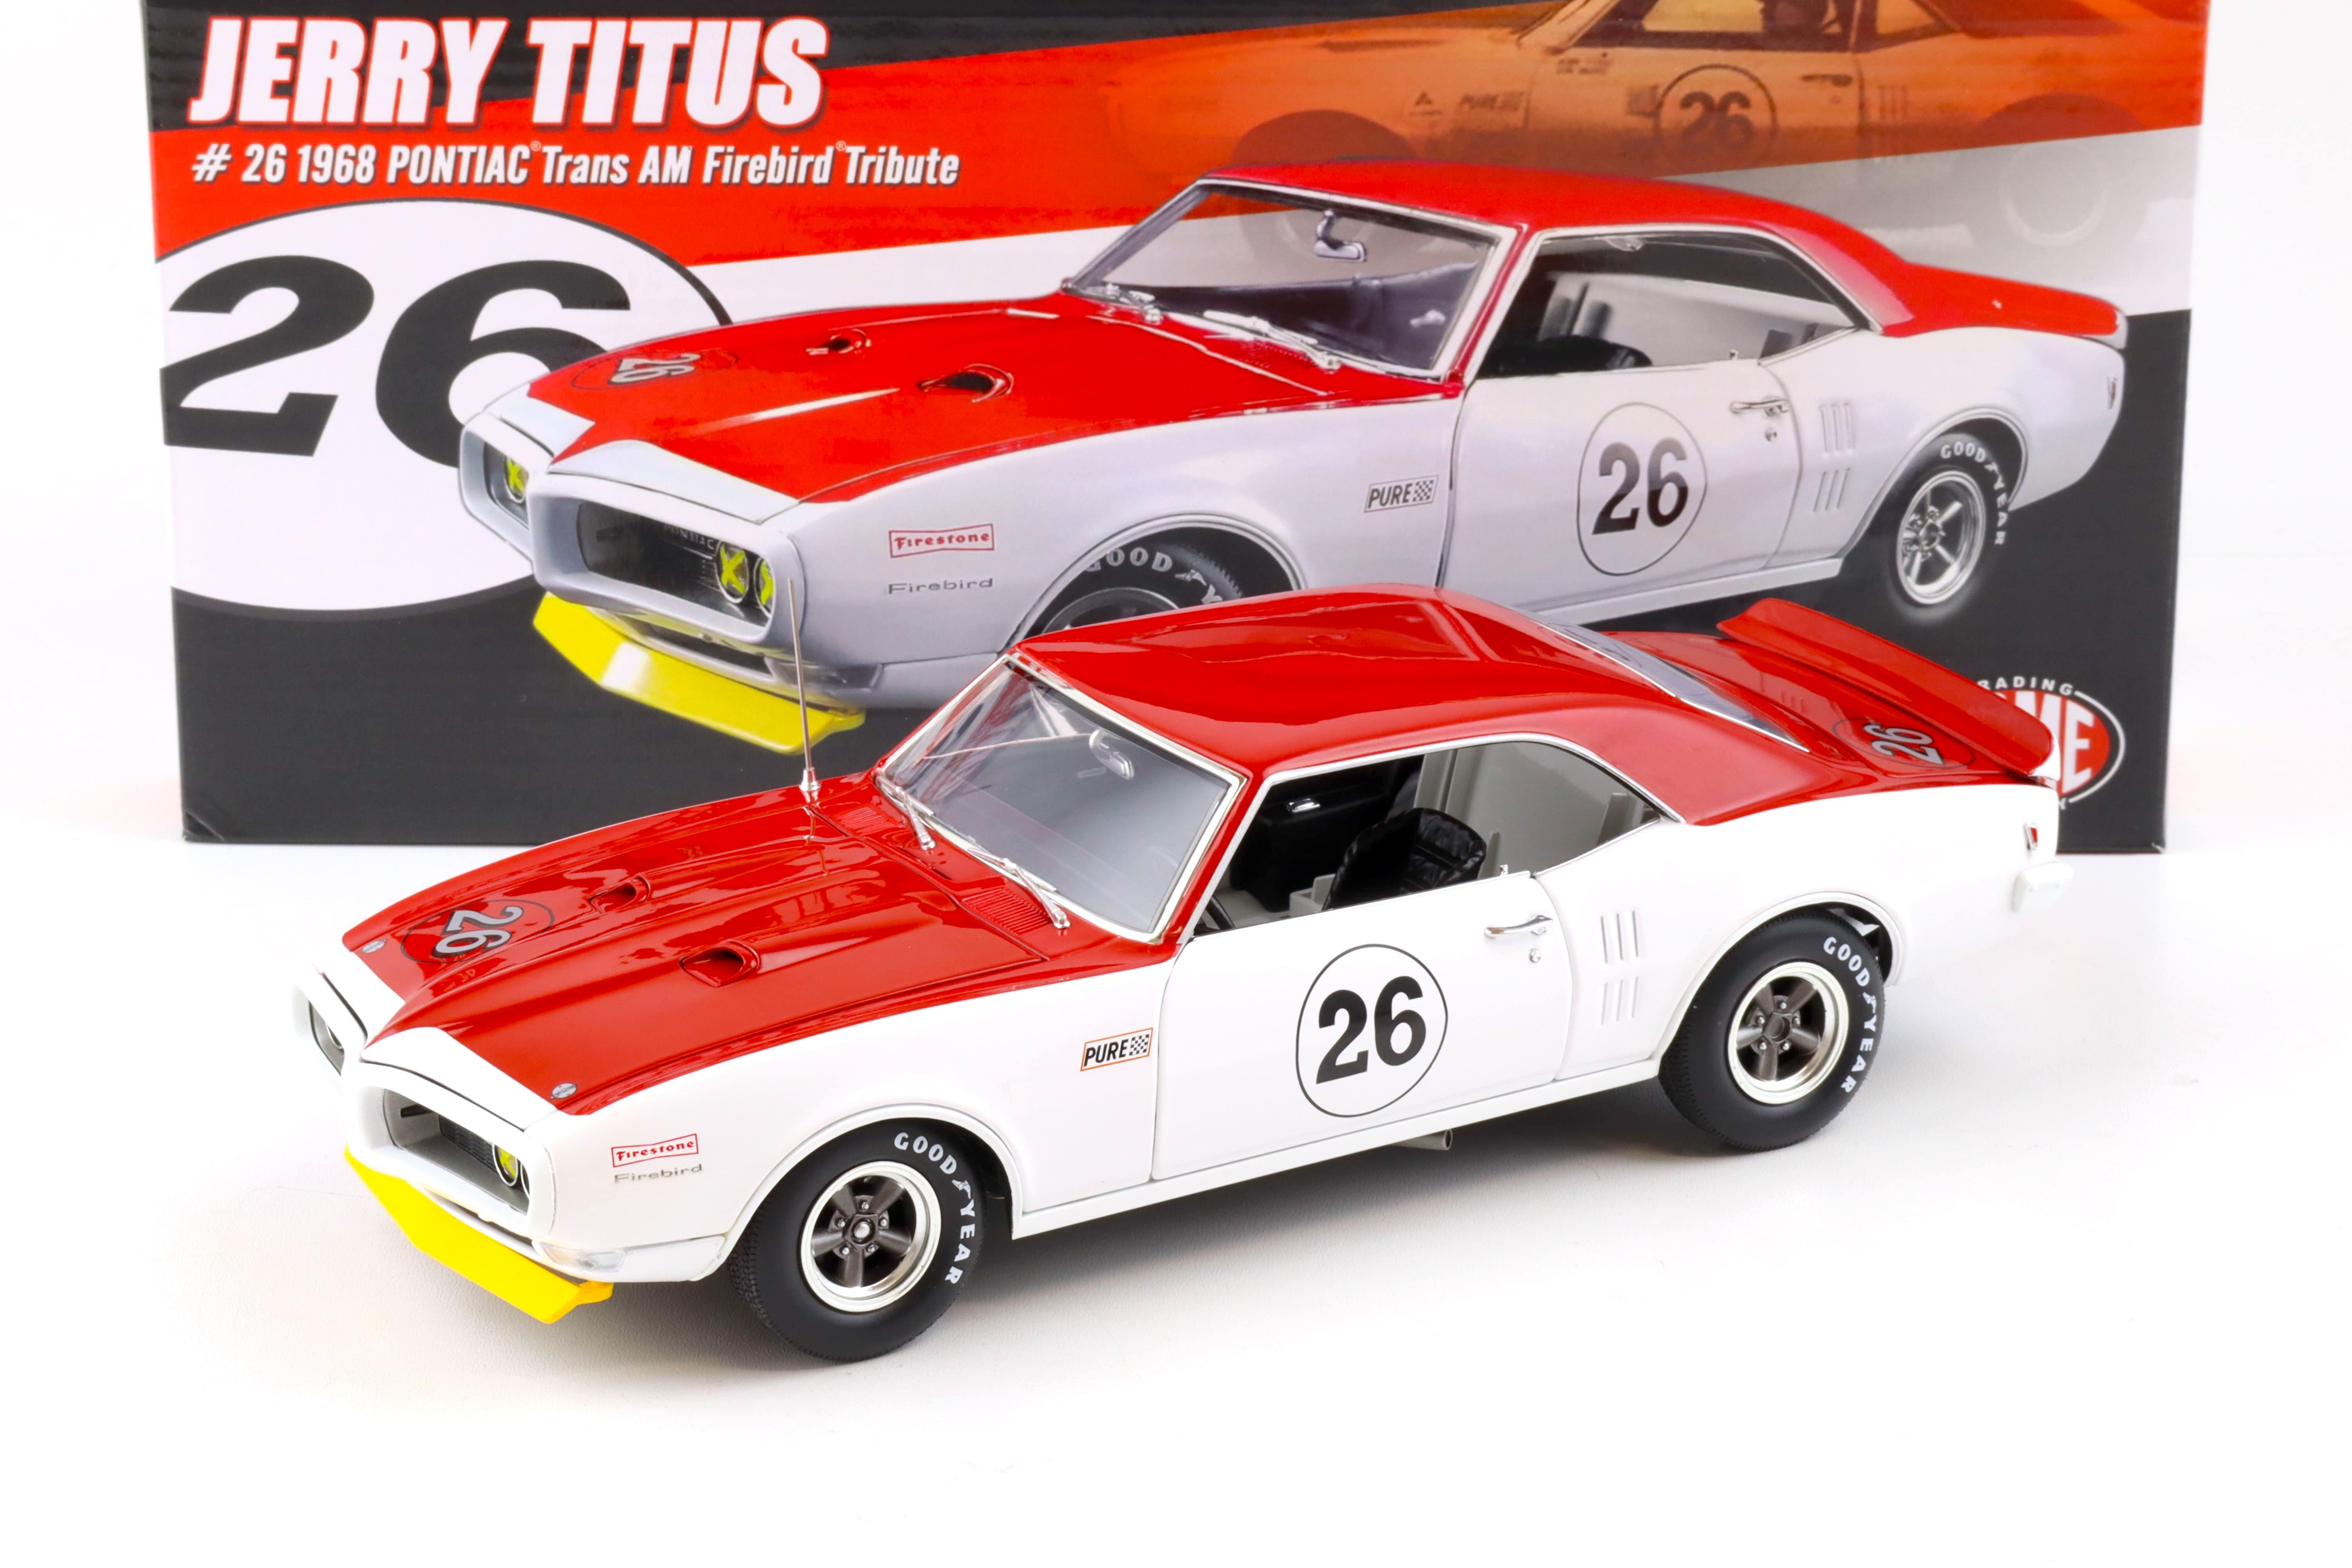 1:18 ACME 1968 Pontiac Trans AM Firebird Tribute Jerry Titus #26 white/ red